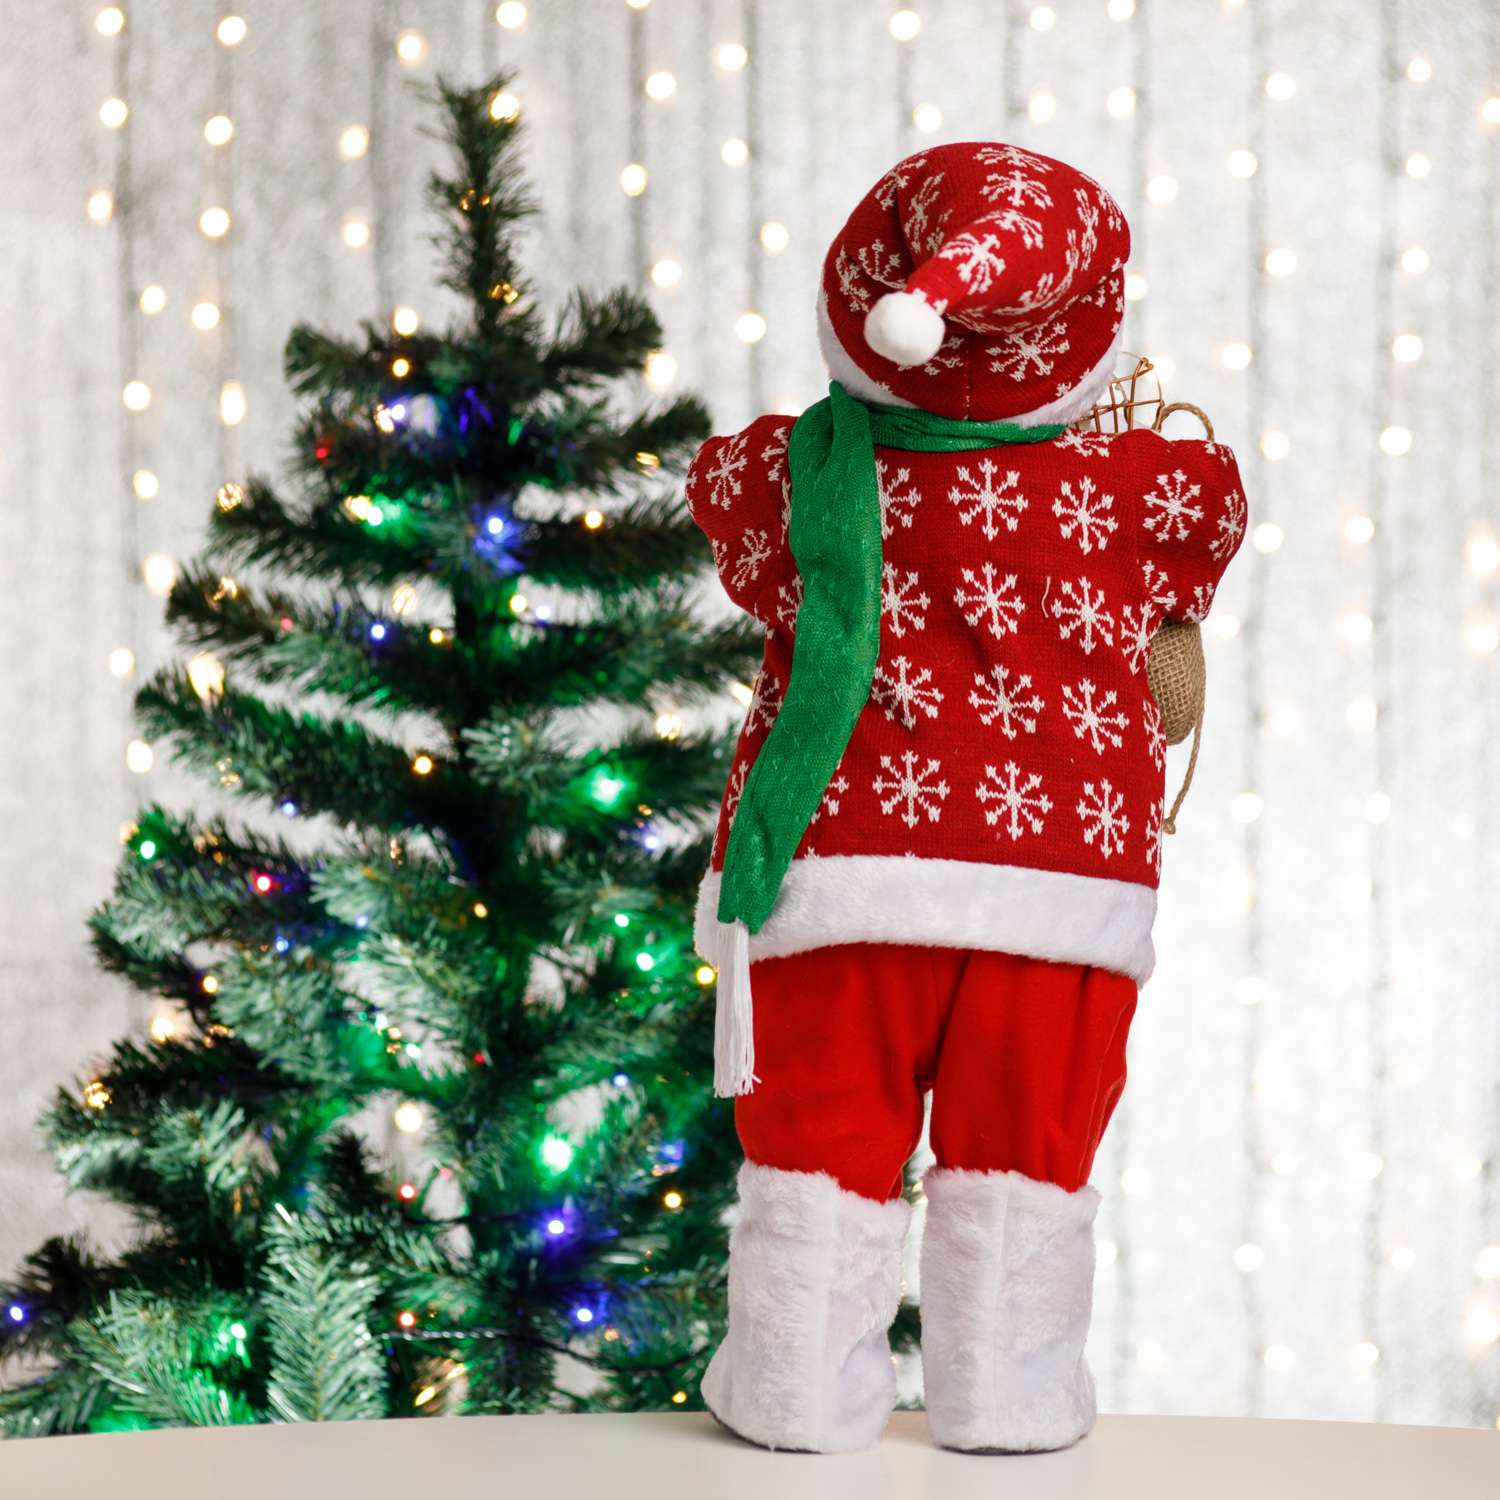 Фигура декоративная BABY STYLE Снеговик в красном костюме со снежинками 60 см - фото 6